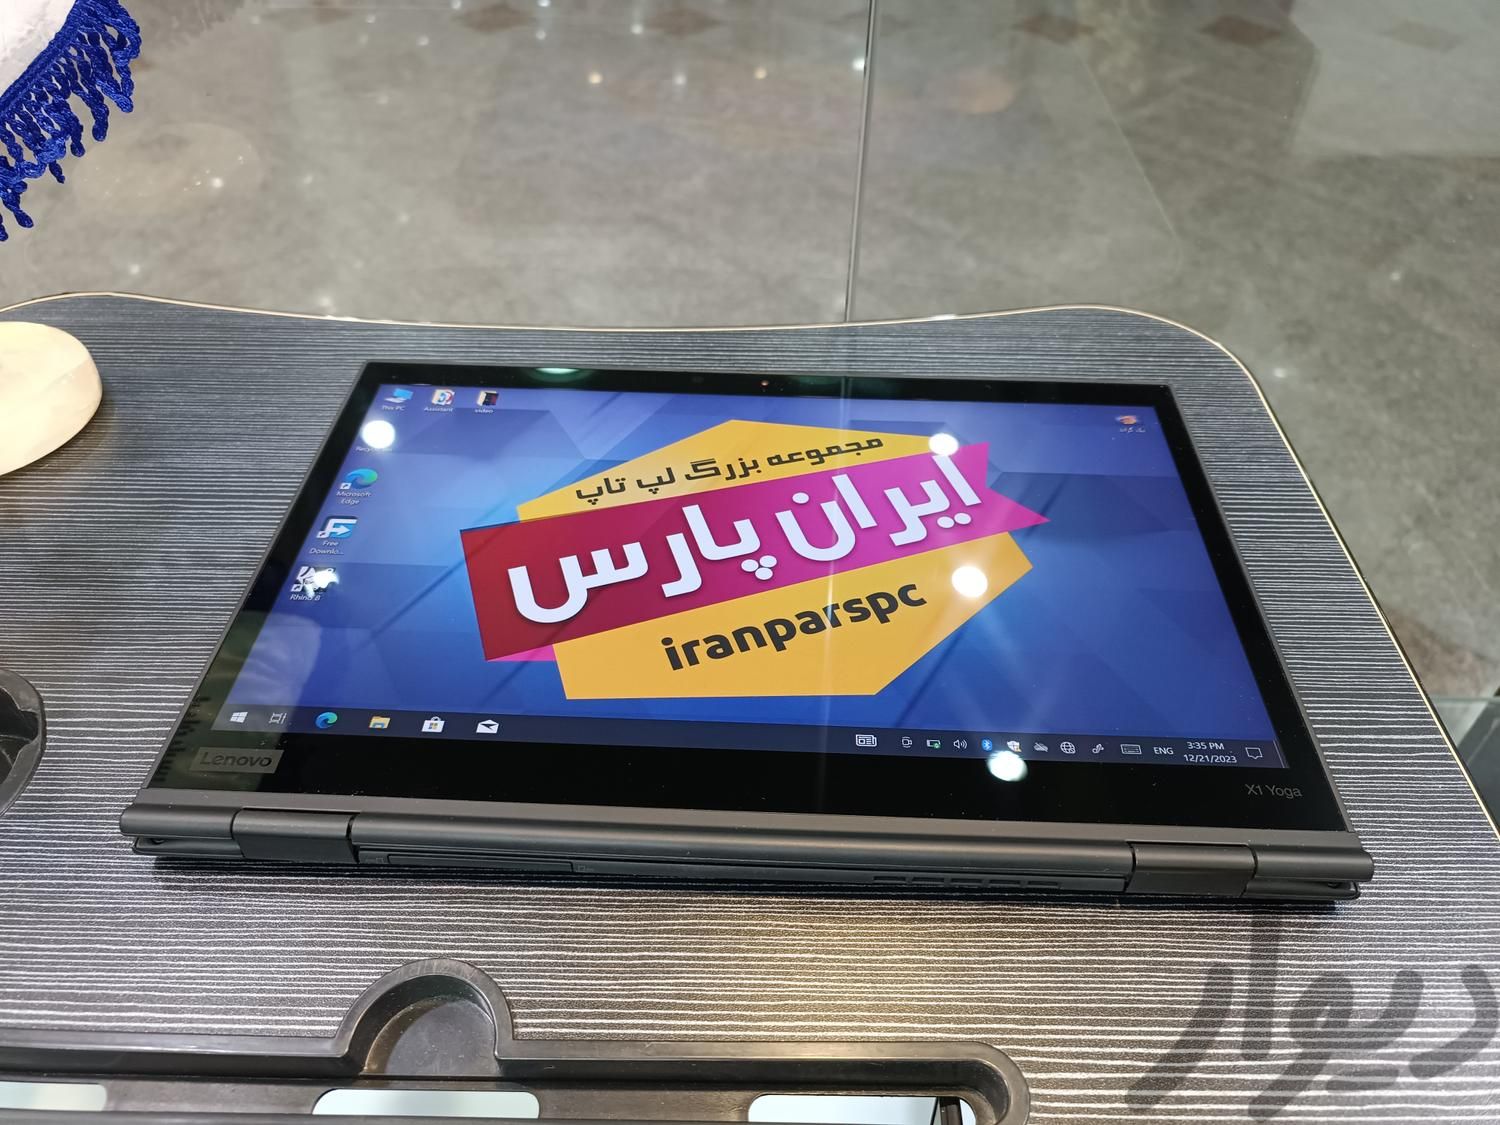 LENOVO THINKPAD YOGA X1 لمسی با قلم لپ تاپ|رایانه همراه|شیراز, شهرک گلستان|دیوار